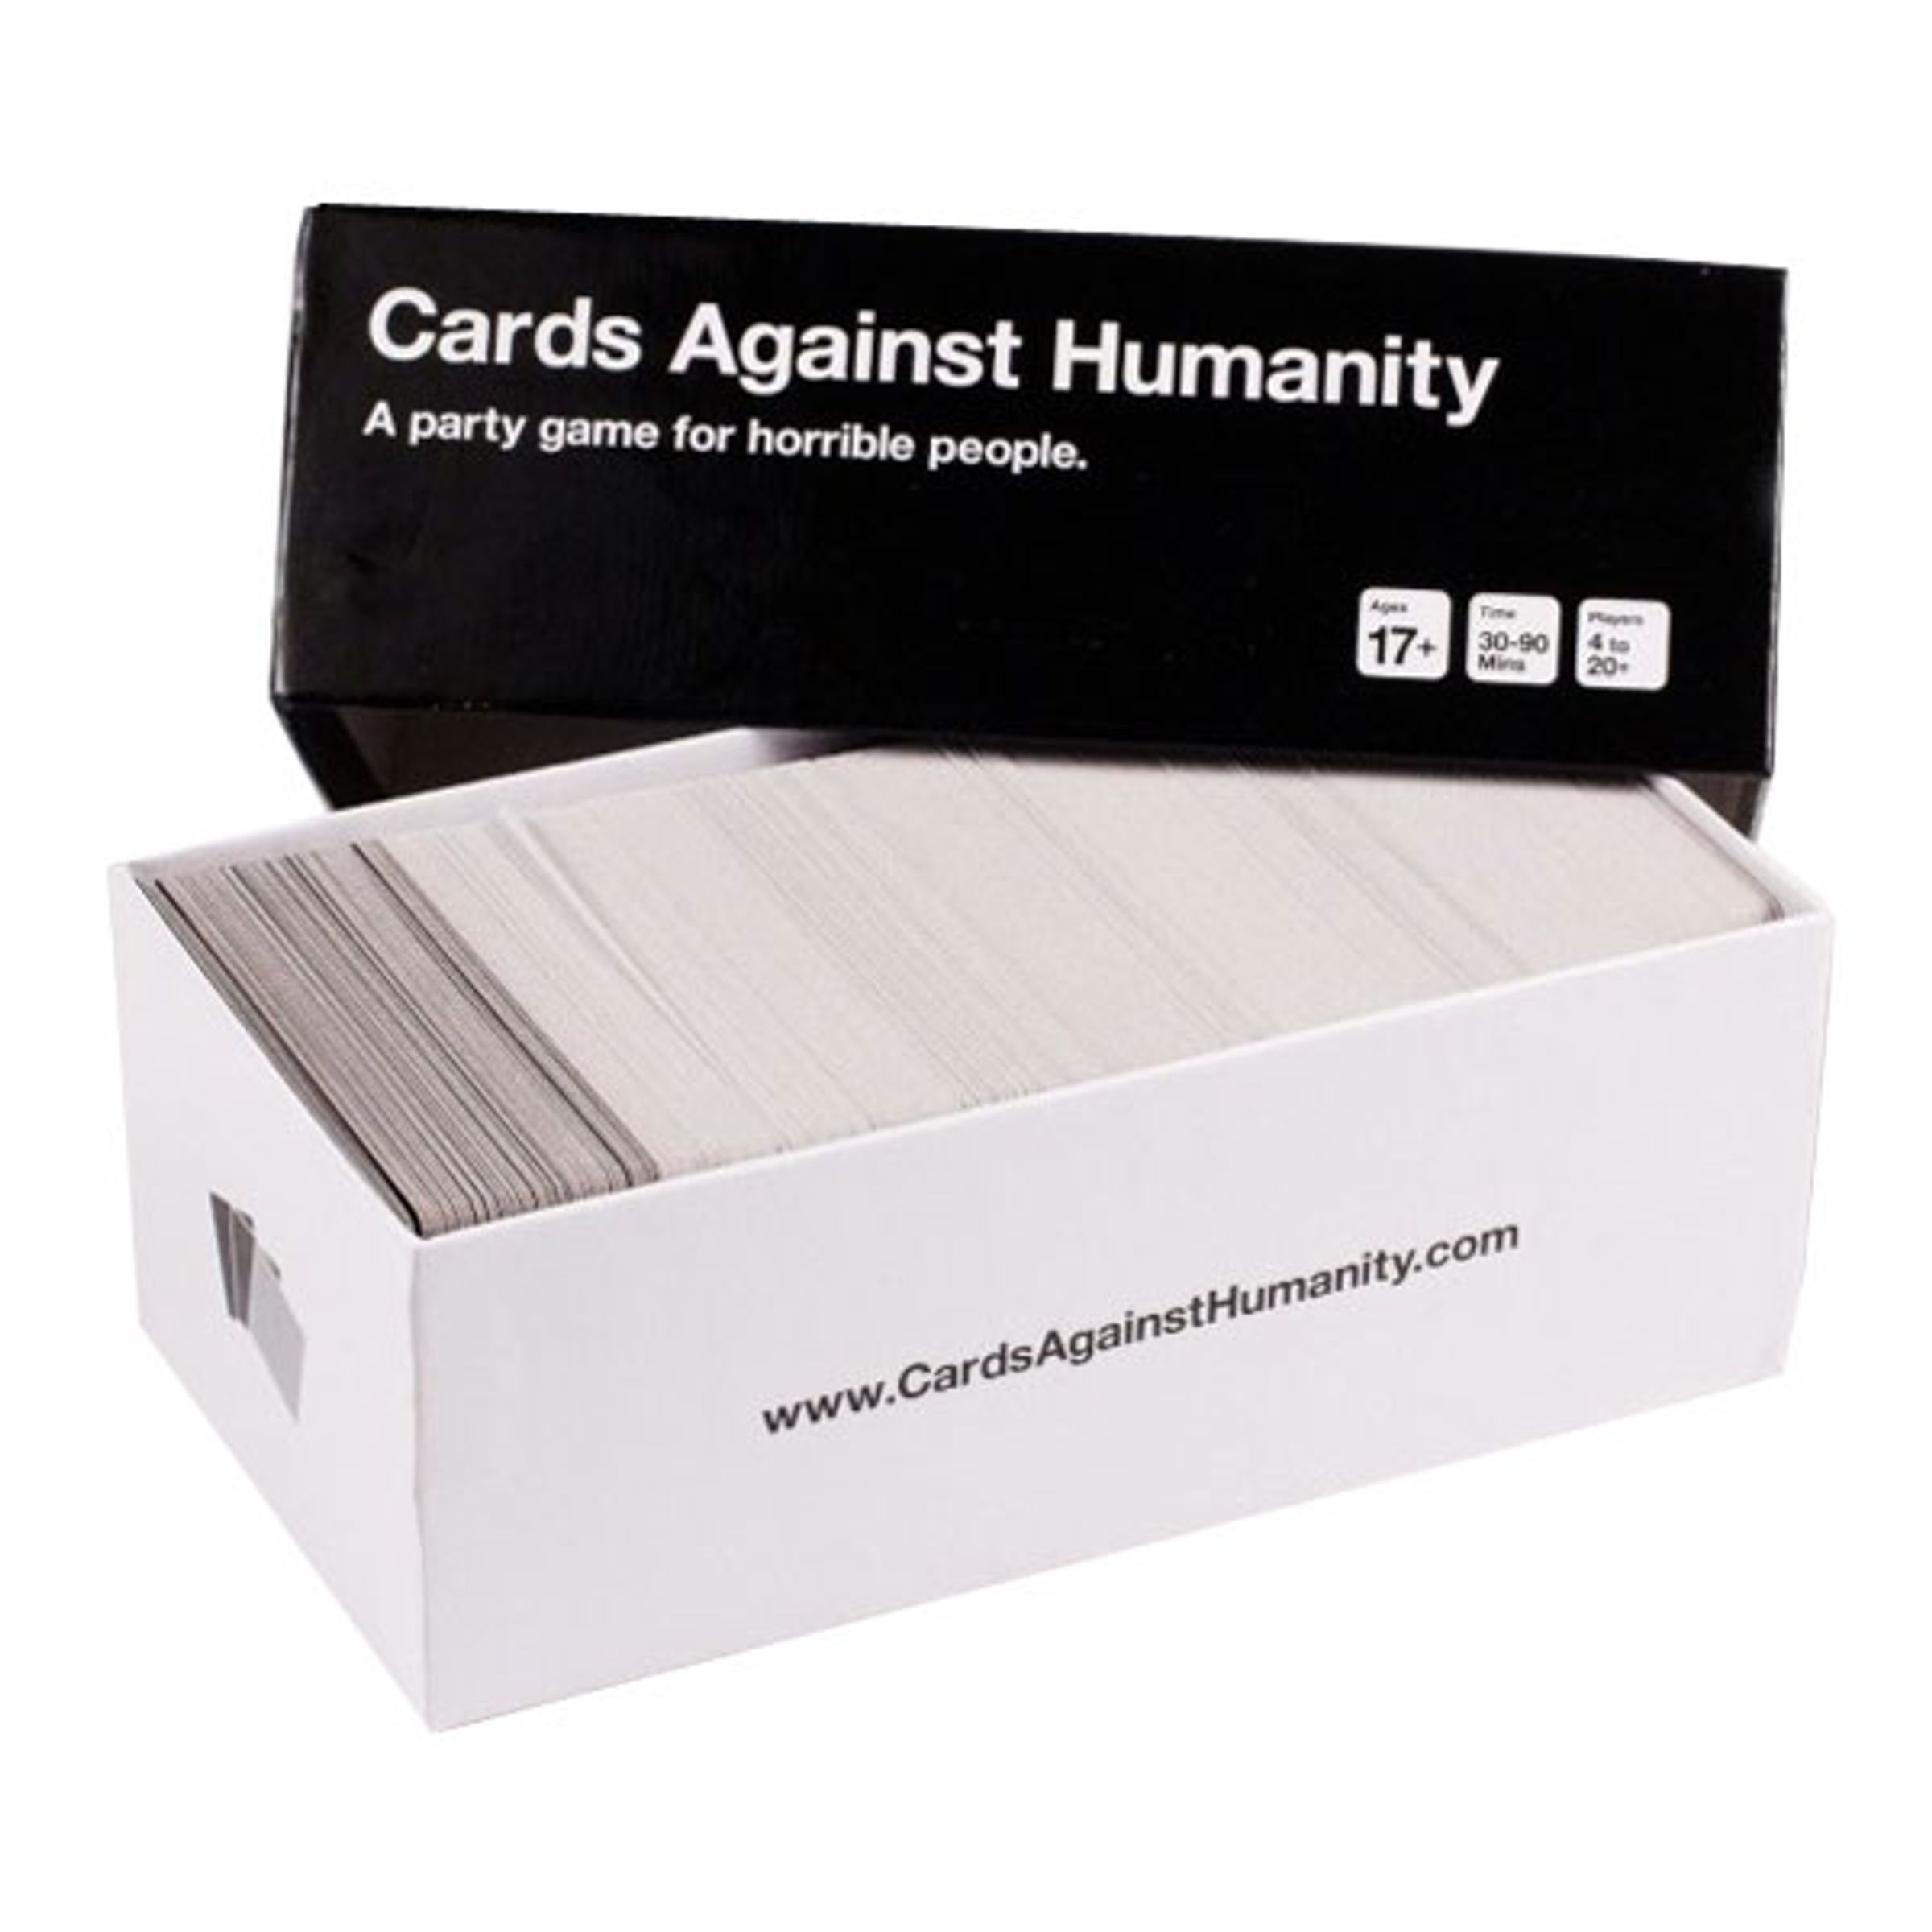 Läs mer om Cards Against Humanity - Period Pack